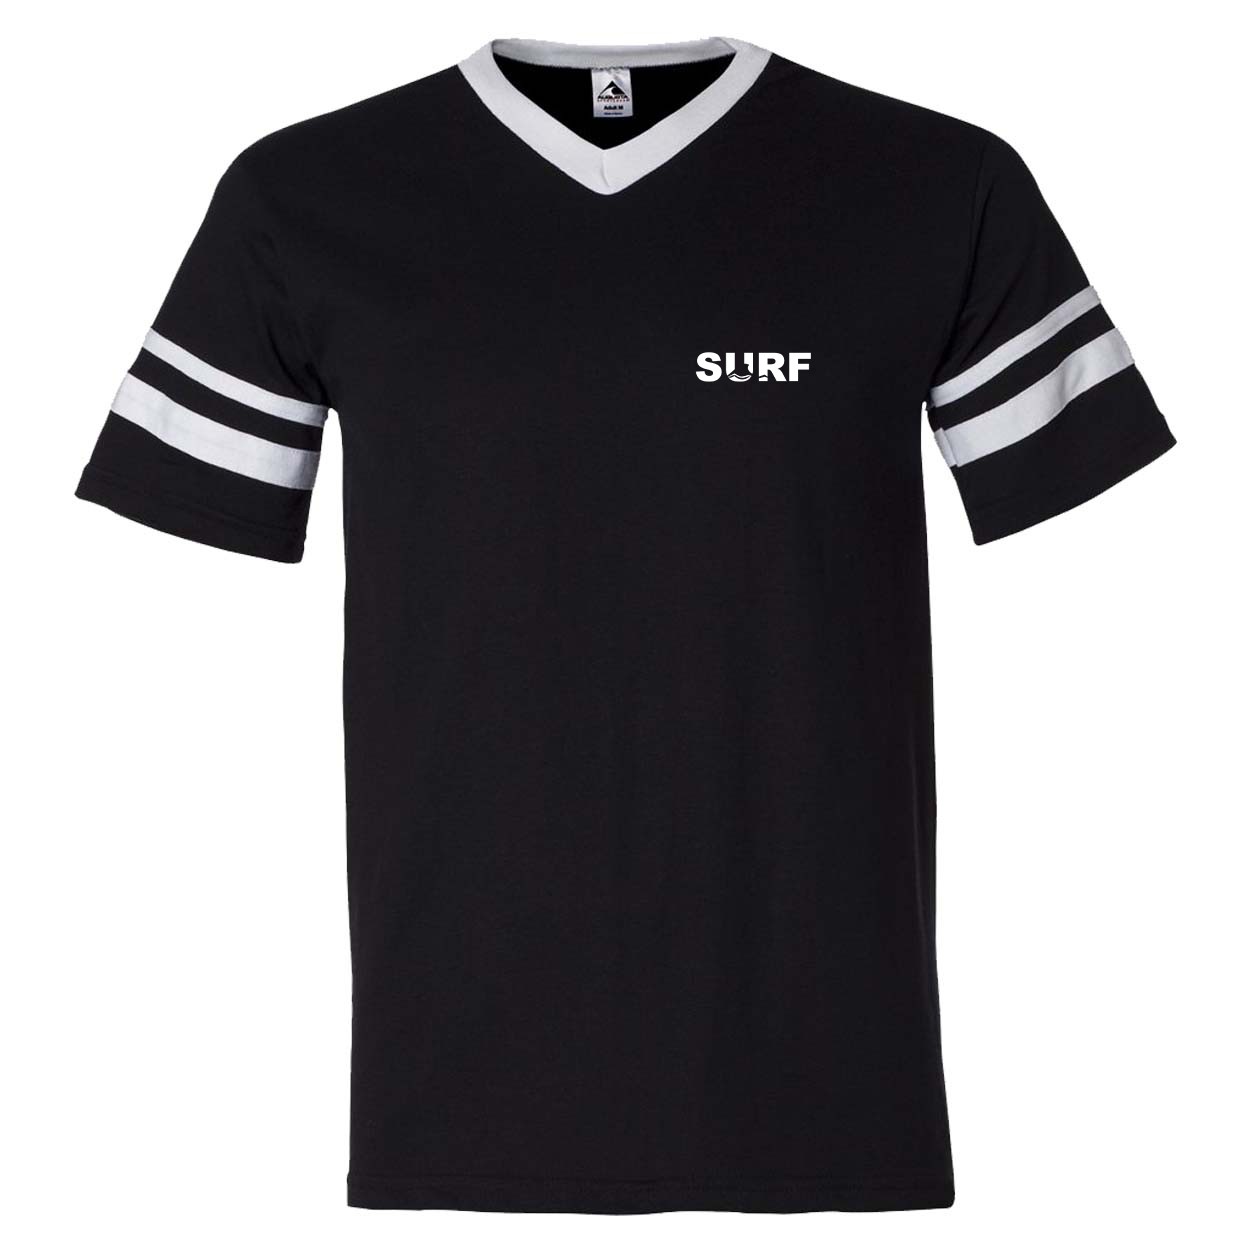 Surf Wave Logo Night Out Premium Striped Jersey T-Shirt Black/White